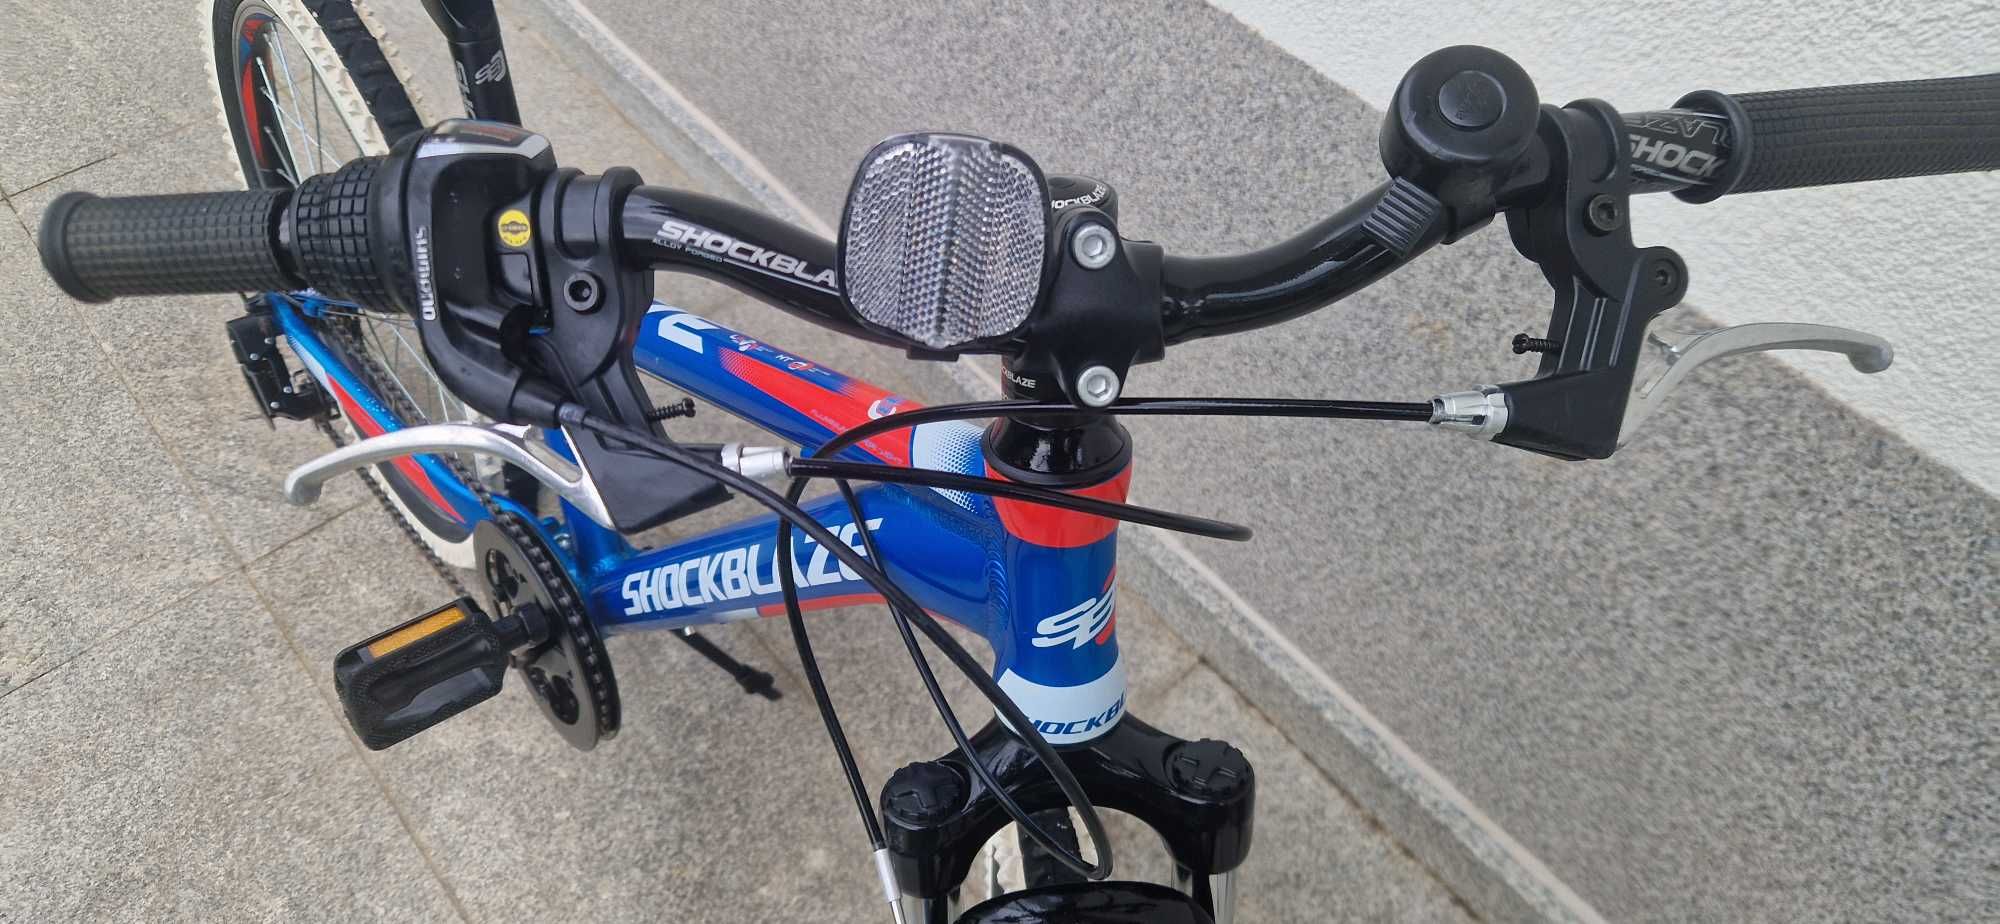 Алуминиев Shockblaze Ride20, детски велосипед